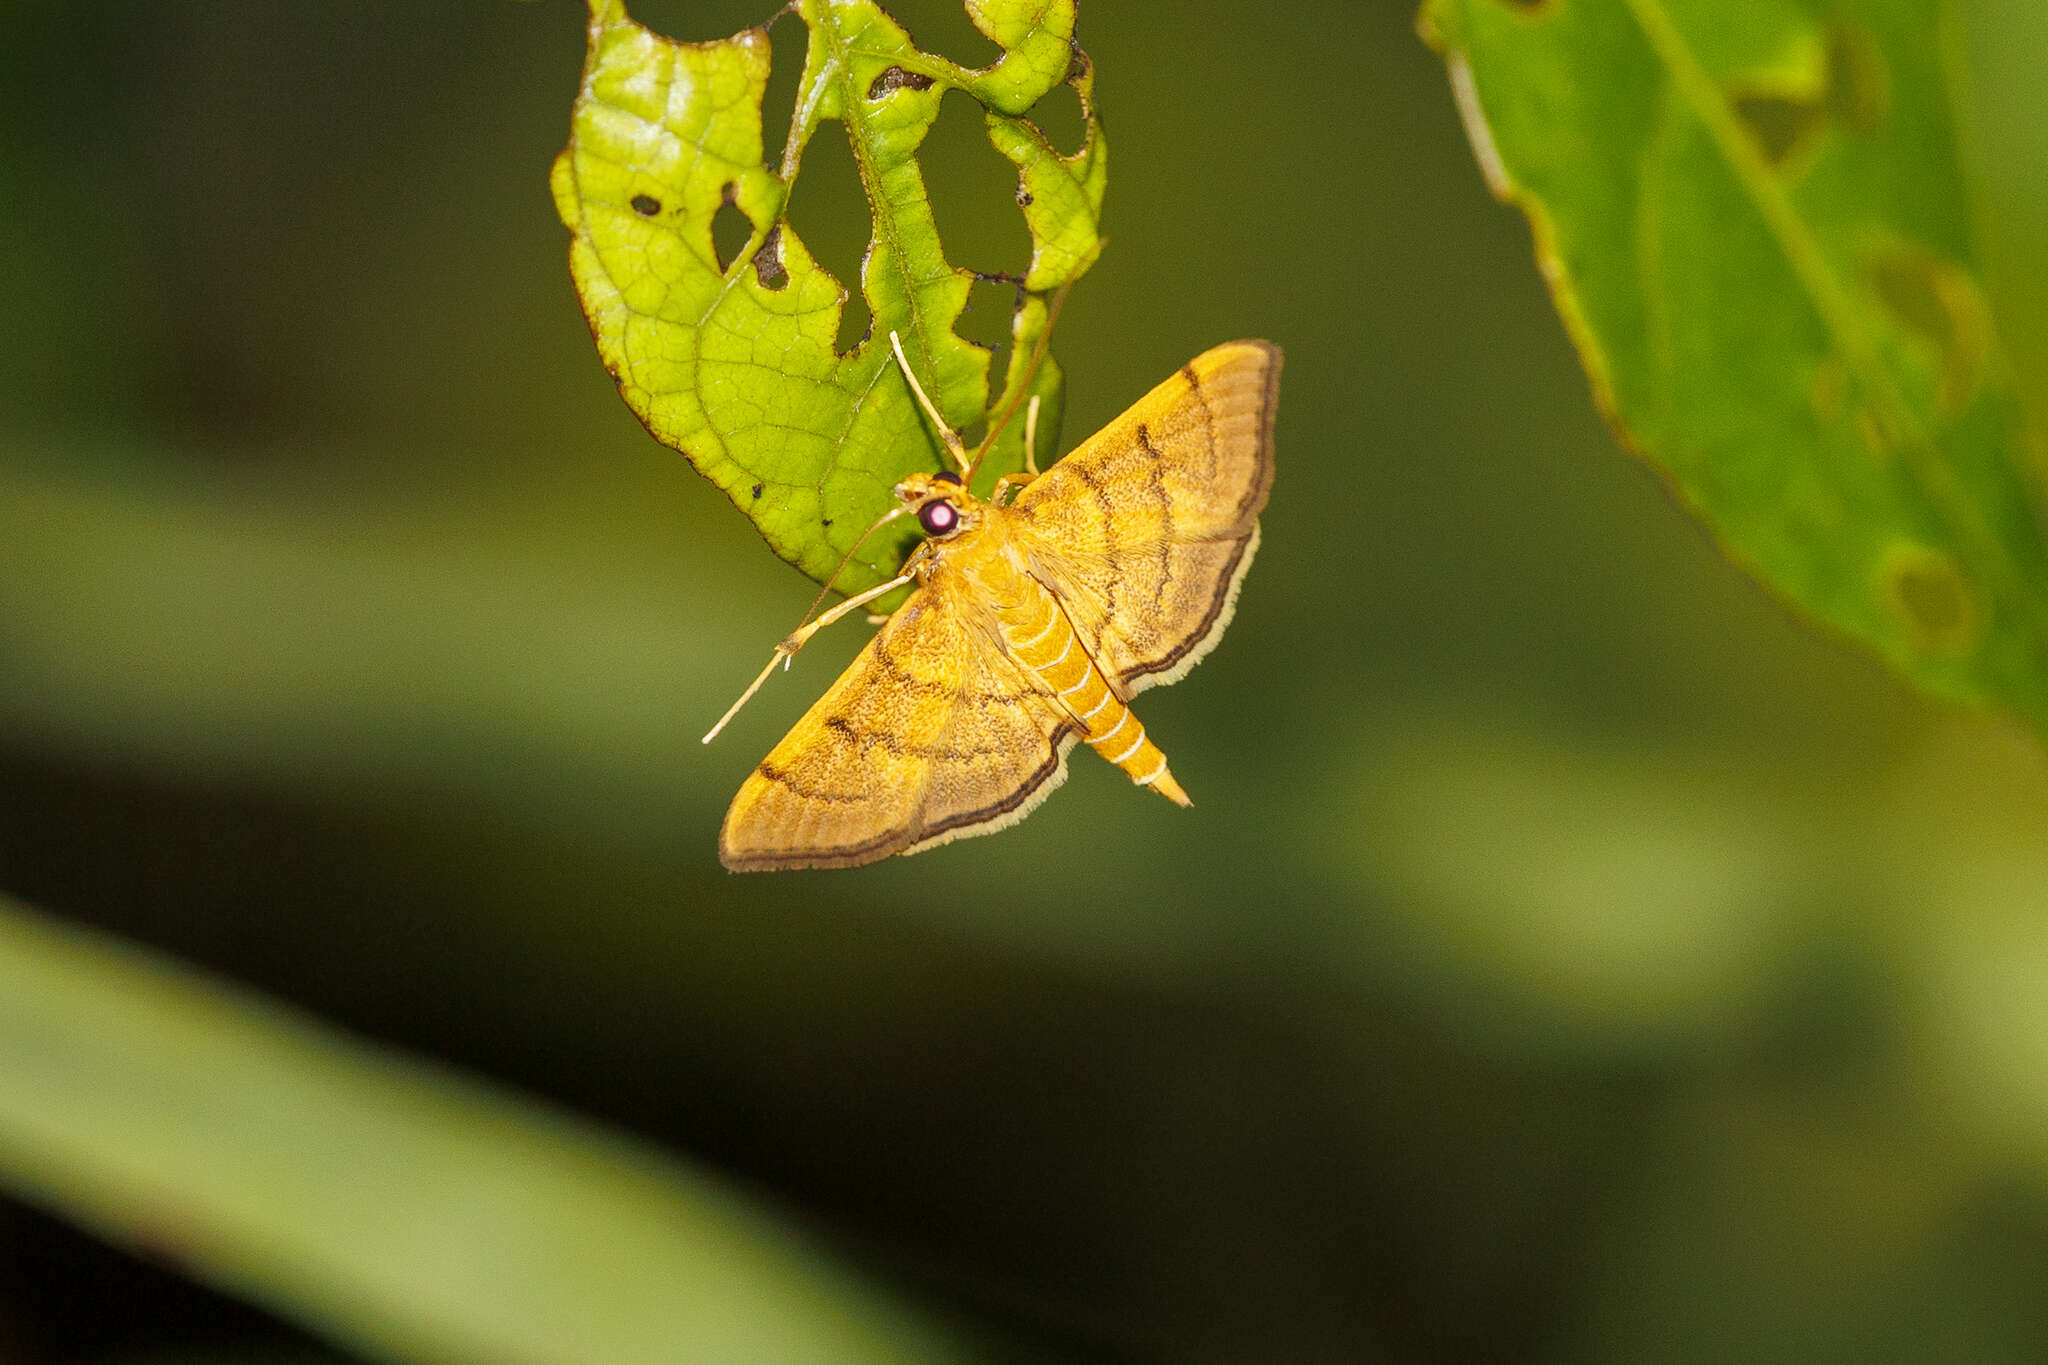 Image of Bean-leaf Webworm Moth